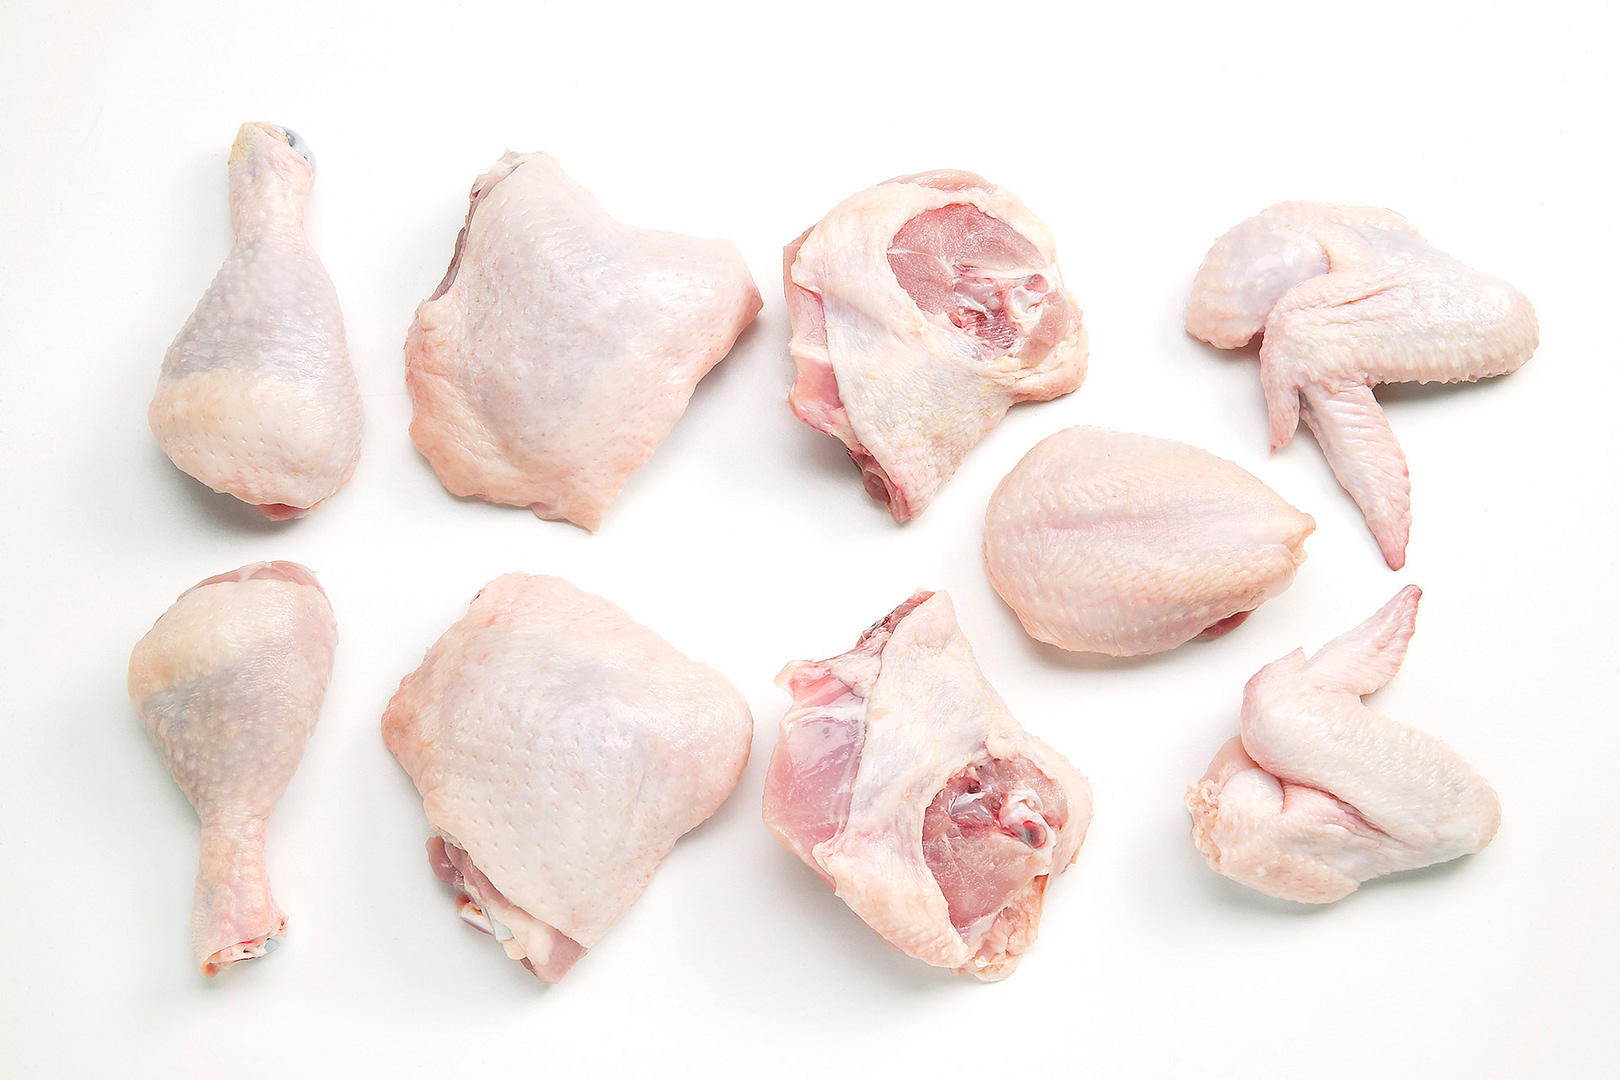 Halal Chicken Cut 1kg